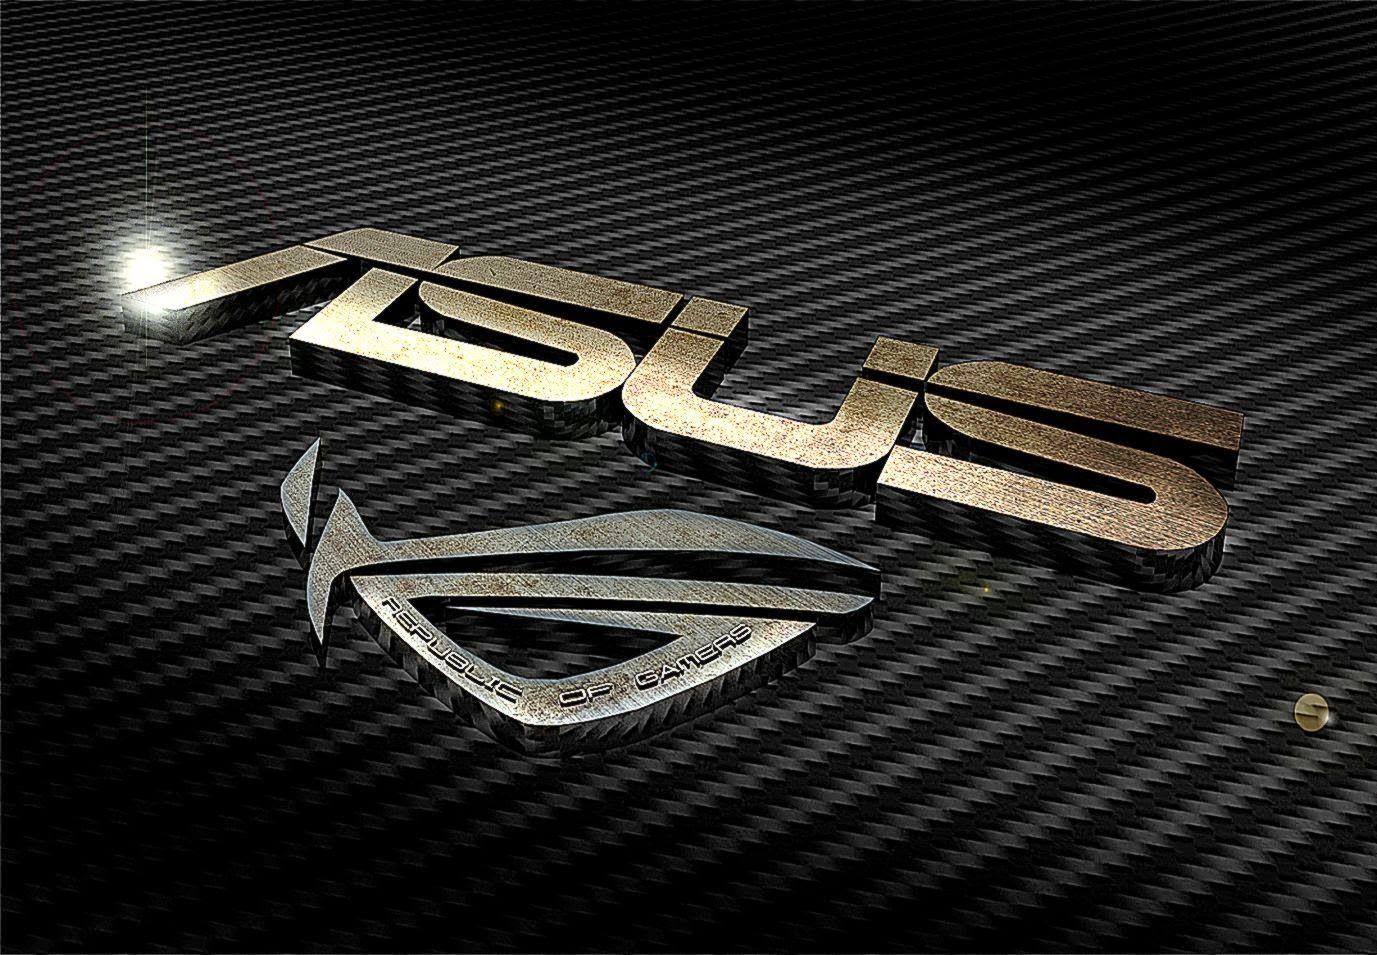 Asus Company Logo - Asus 3D Logo #Photo - HD Wallpapers